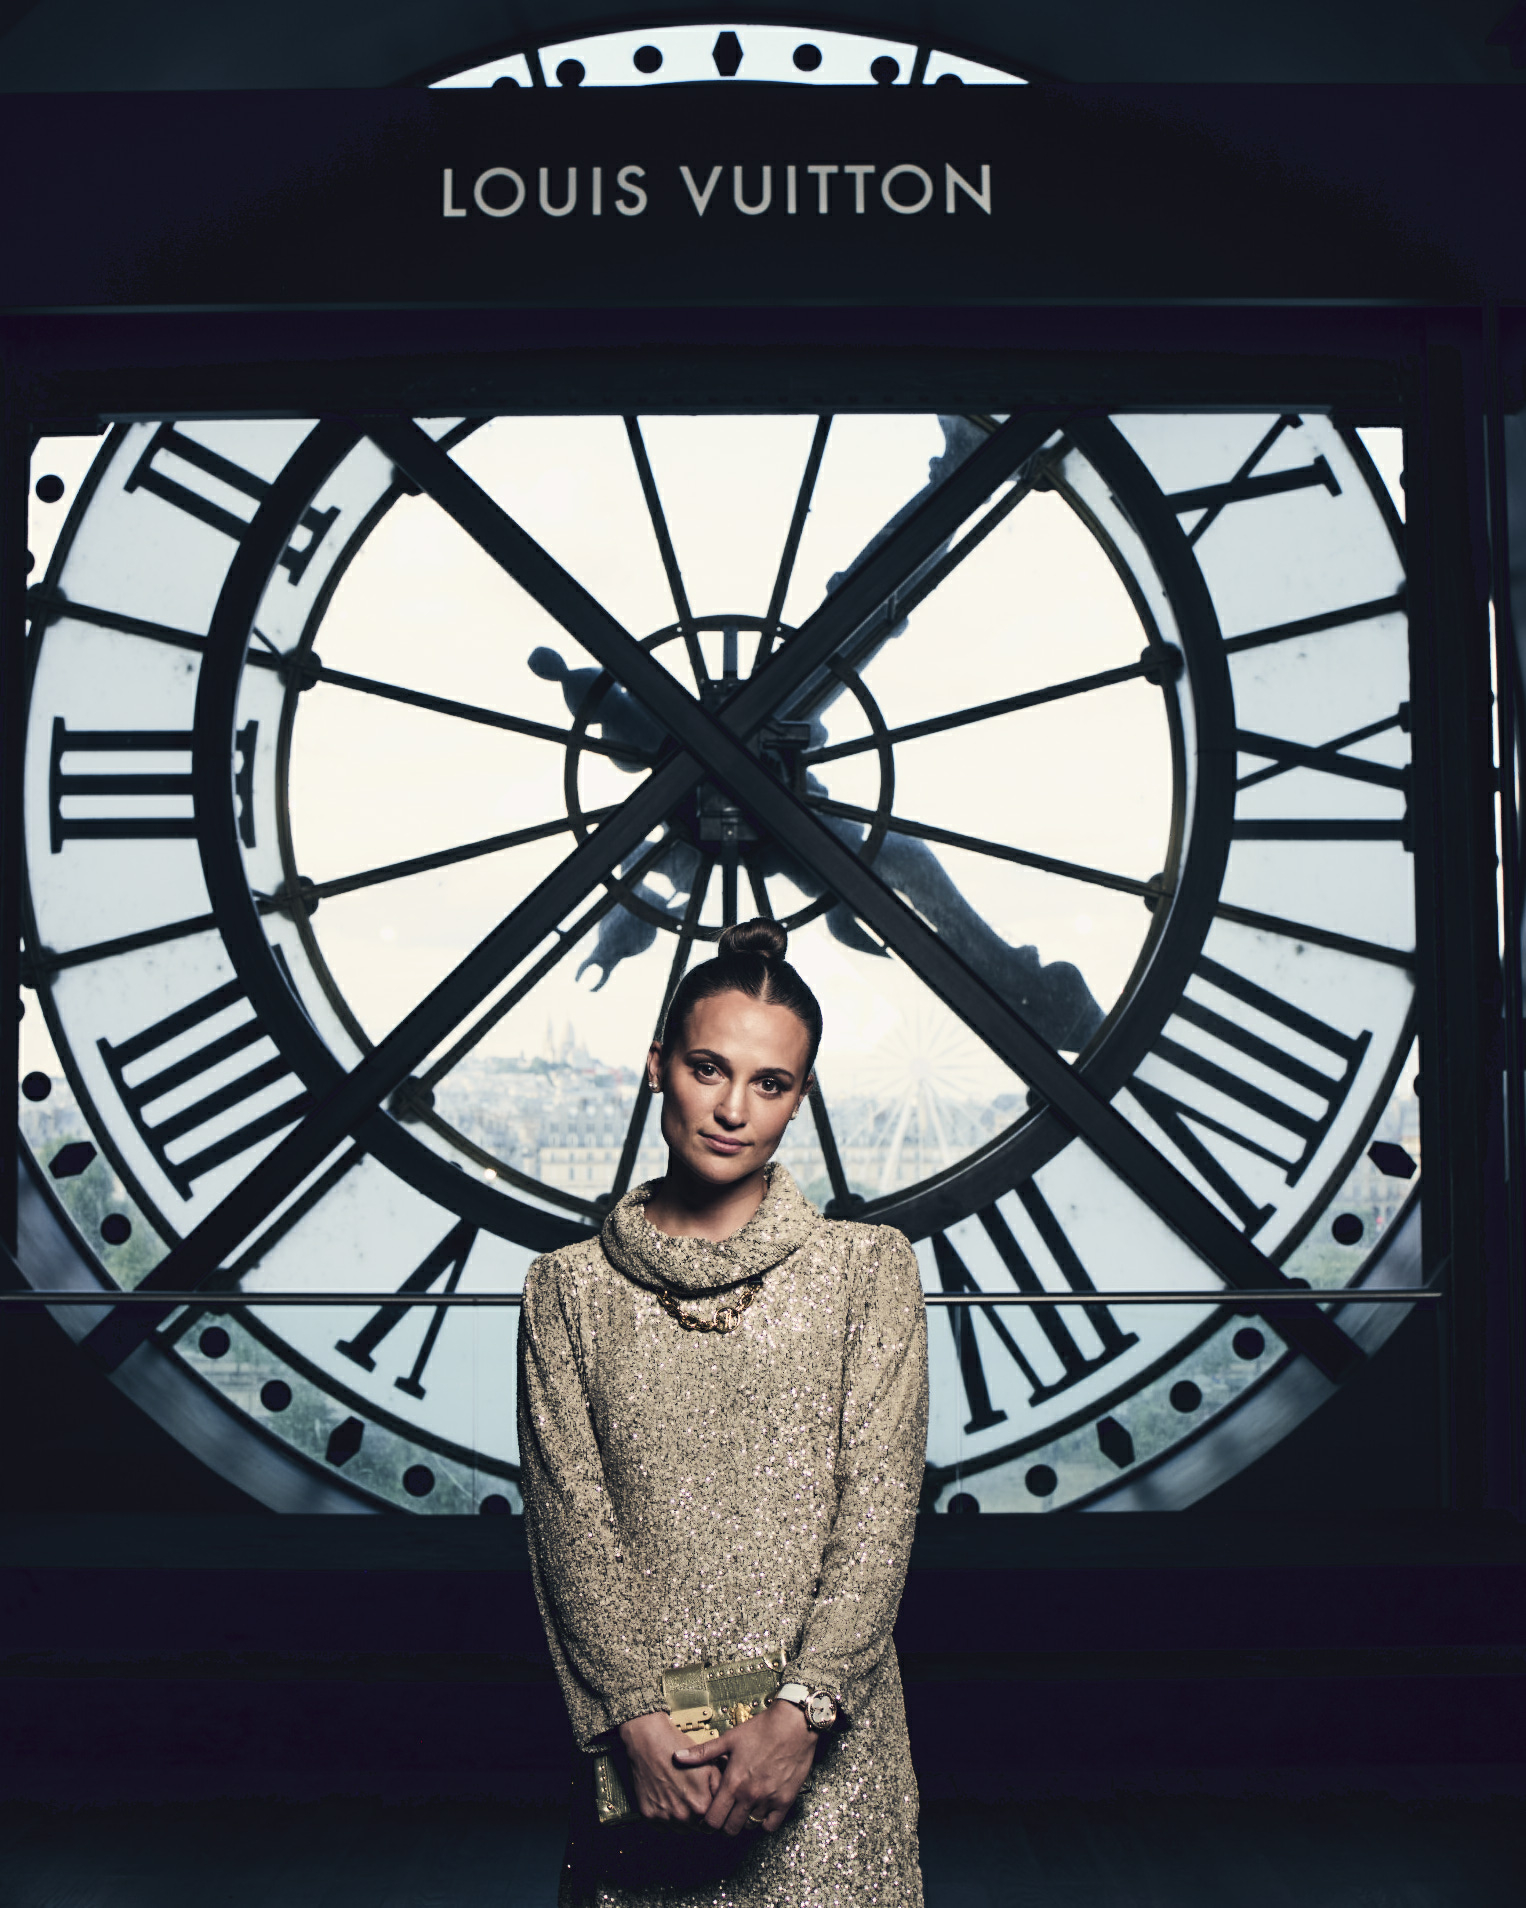 Louis Vuitton's Tambour gets a facelift, Lifestyle - THE BUSINESS